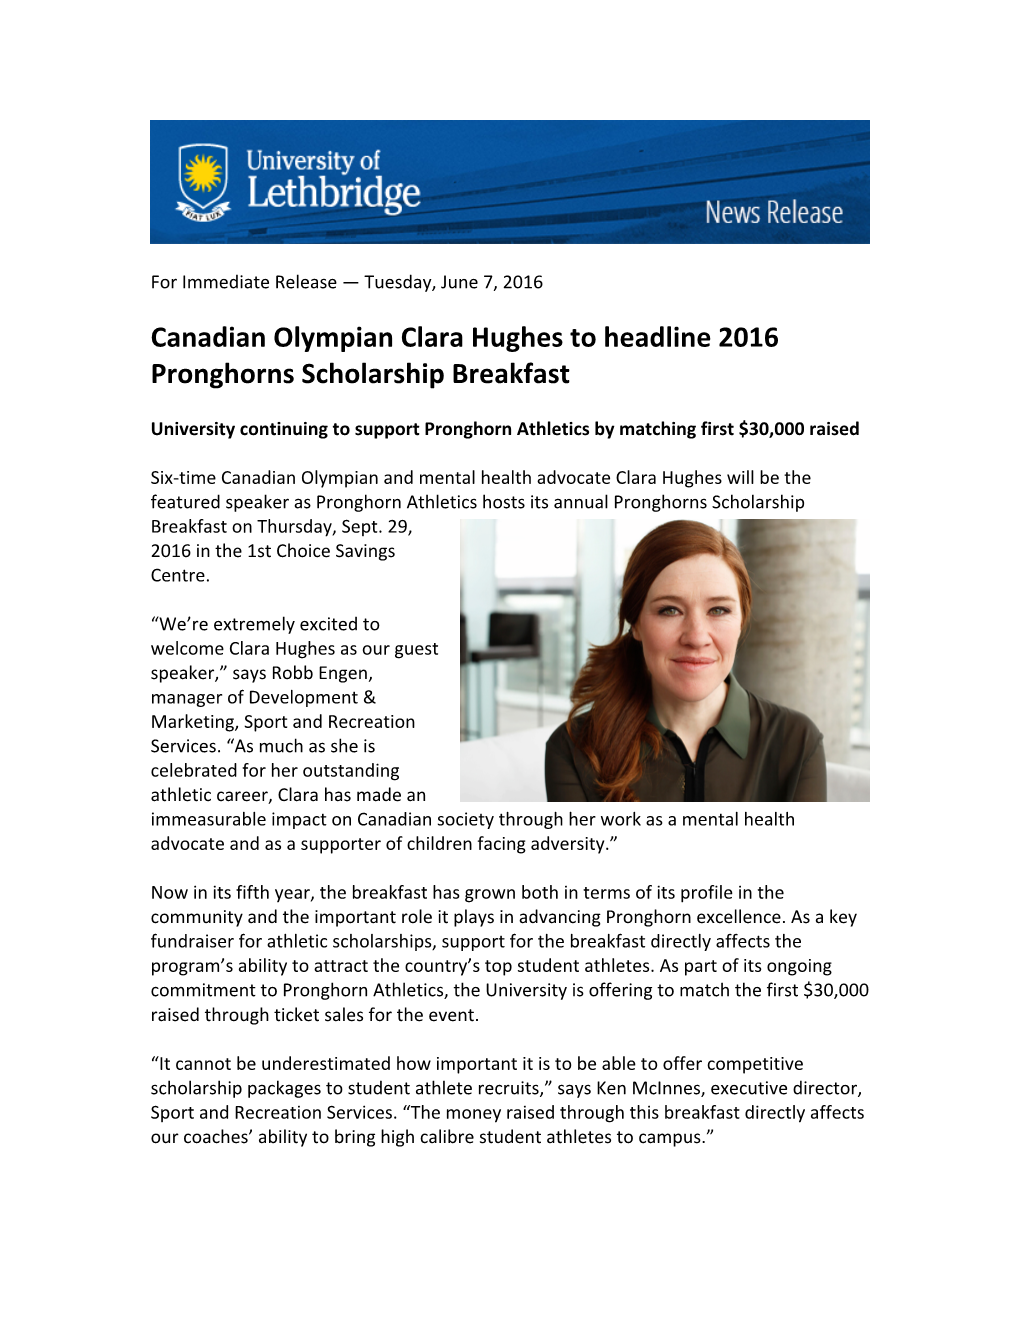 Canadian Olympian Clara Hughes to Headline 2016 Pronghorns Scholarship Breakfast